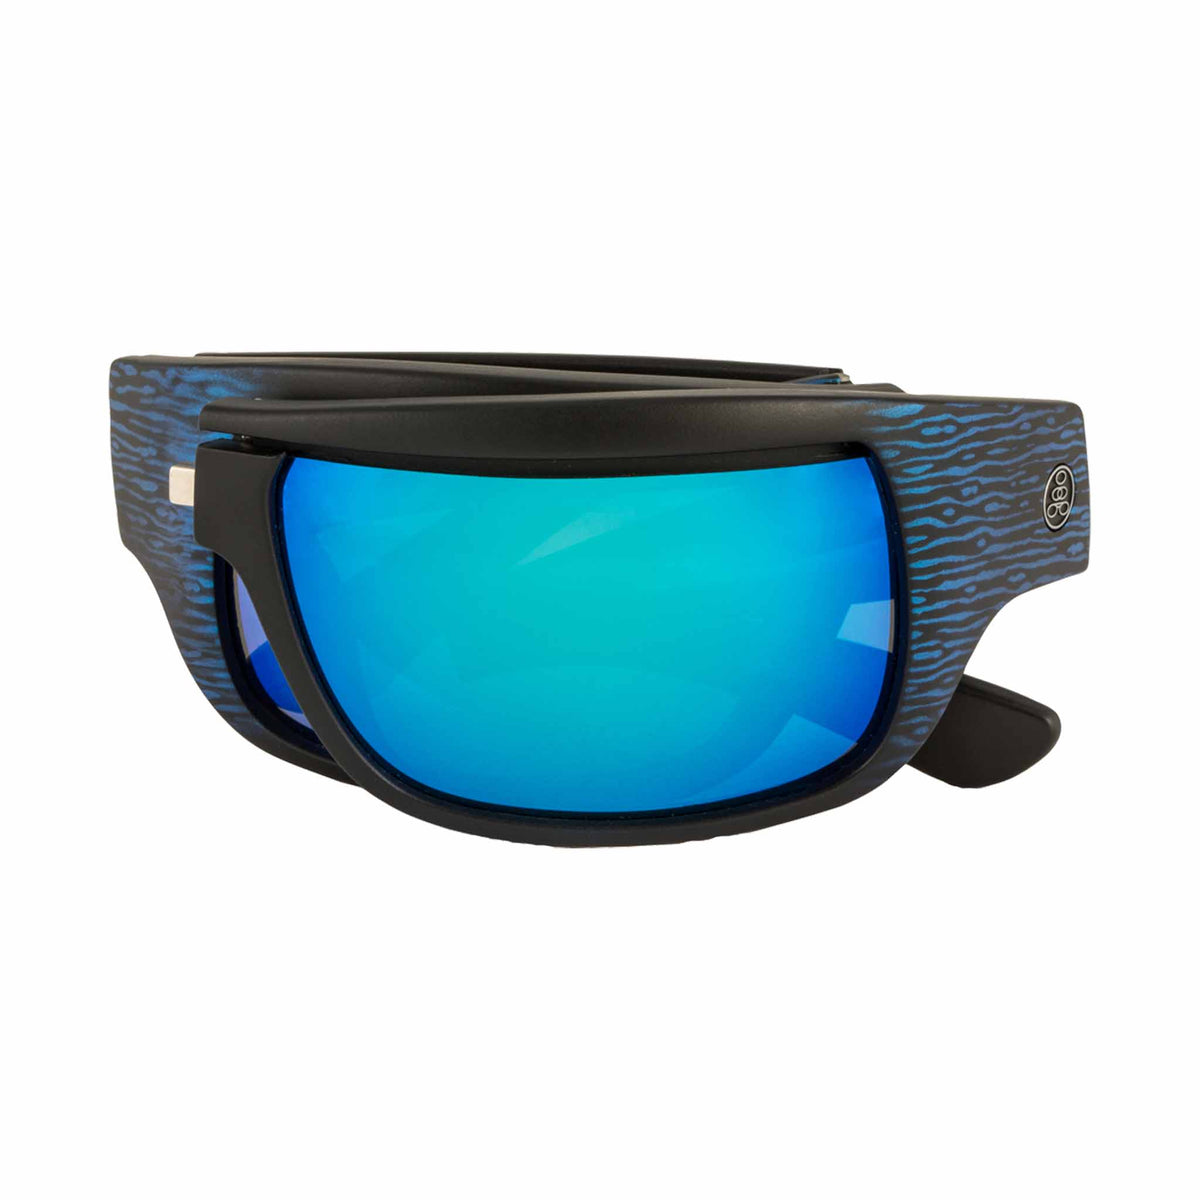 Popticals, Premium Compact Sunglasses, PopH2O, 010070-EUUN, Polarized Sunglasses, Matte Blue/Black Wood Frame, Gray Lenses w/Blue Mirror Finish, Compact View